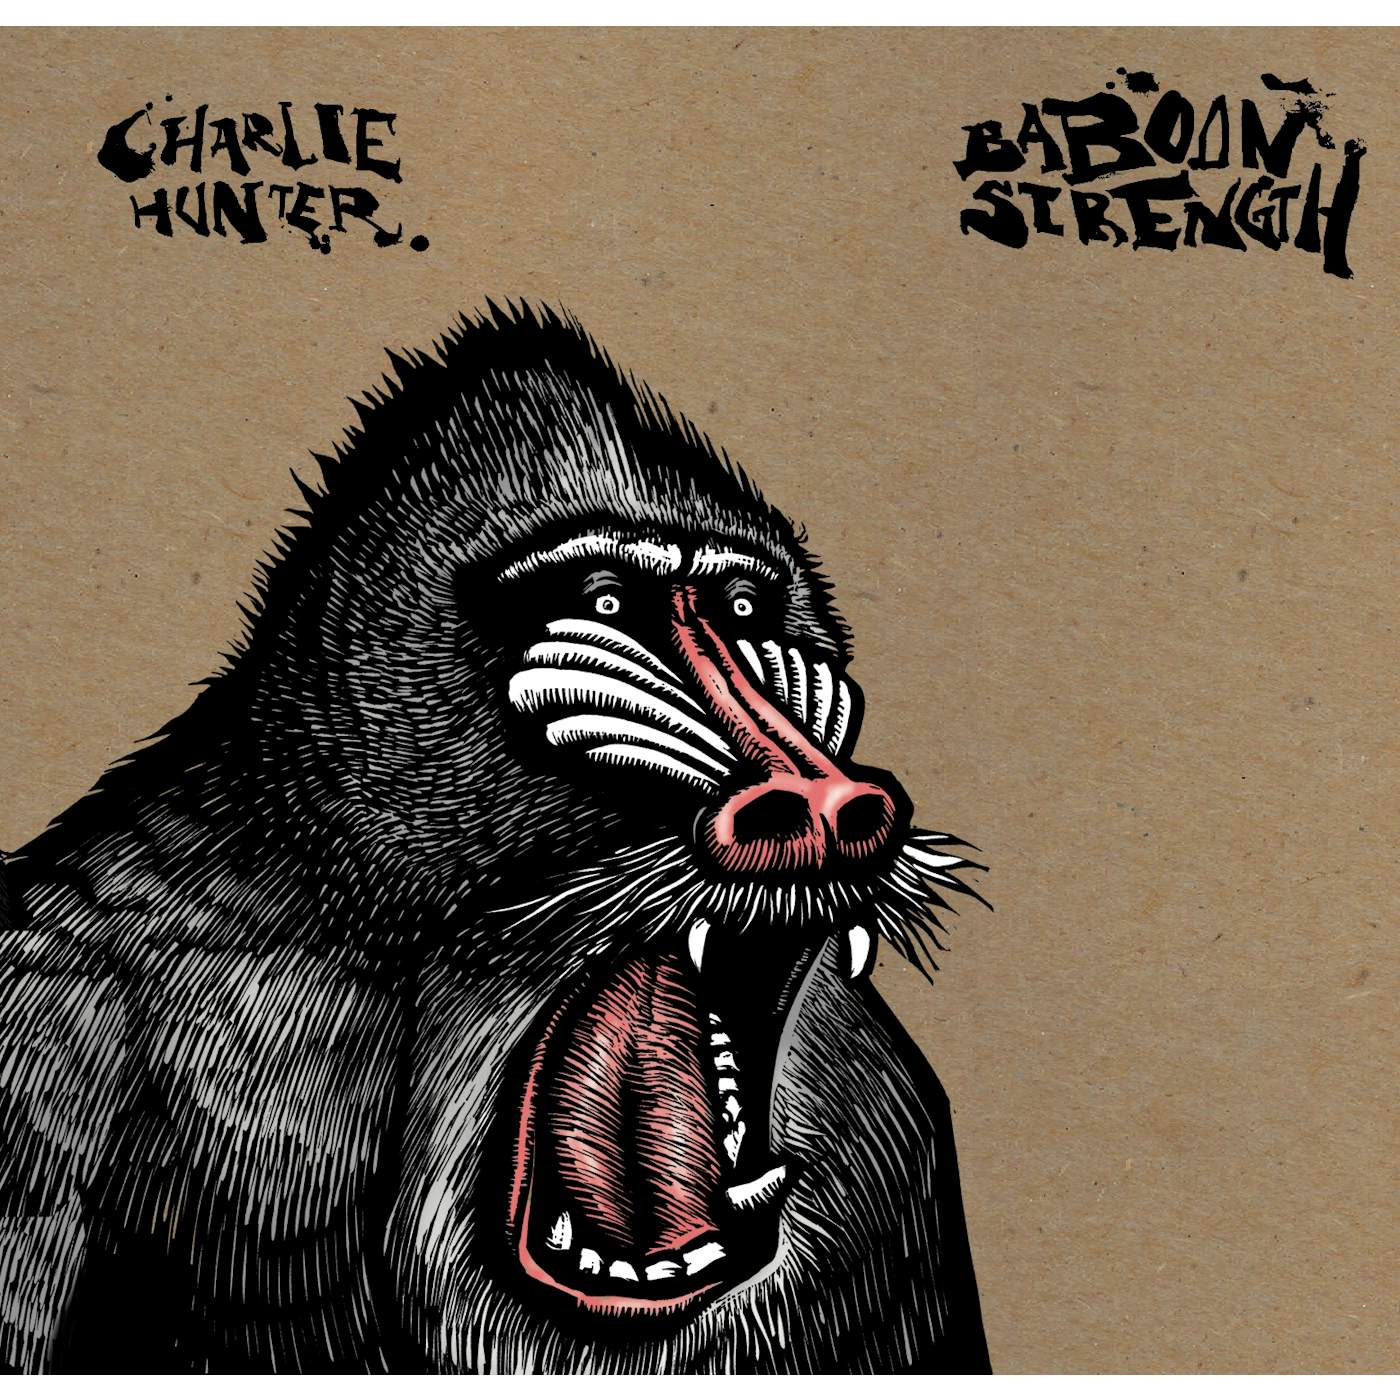 Charlie Hunter Baboon Strength Vinyl Record